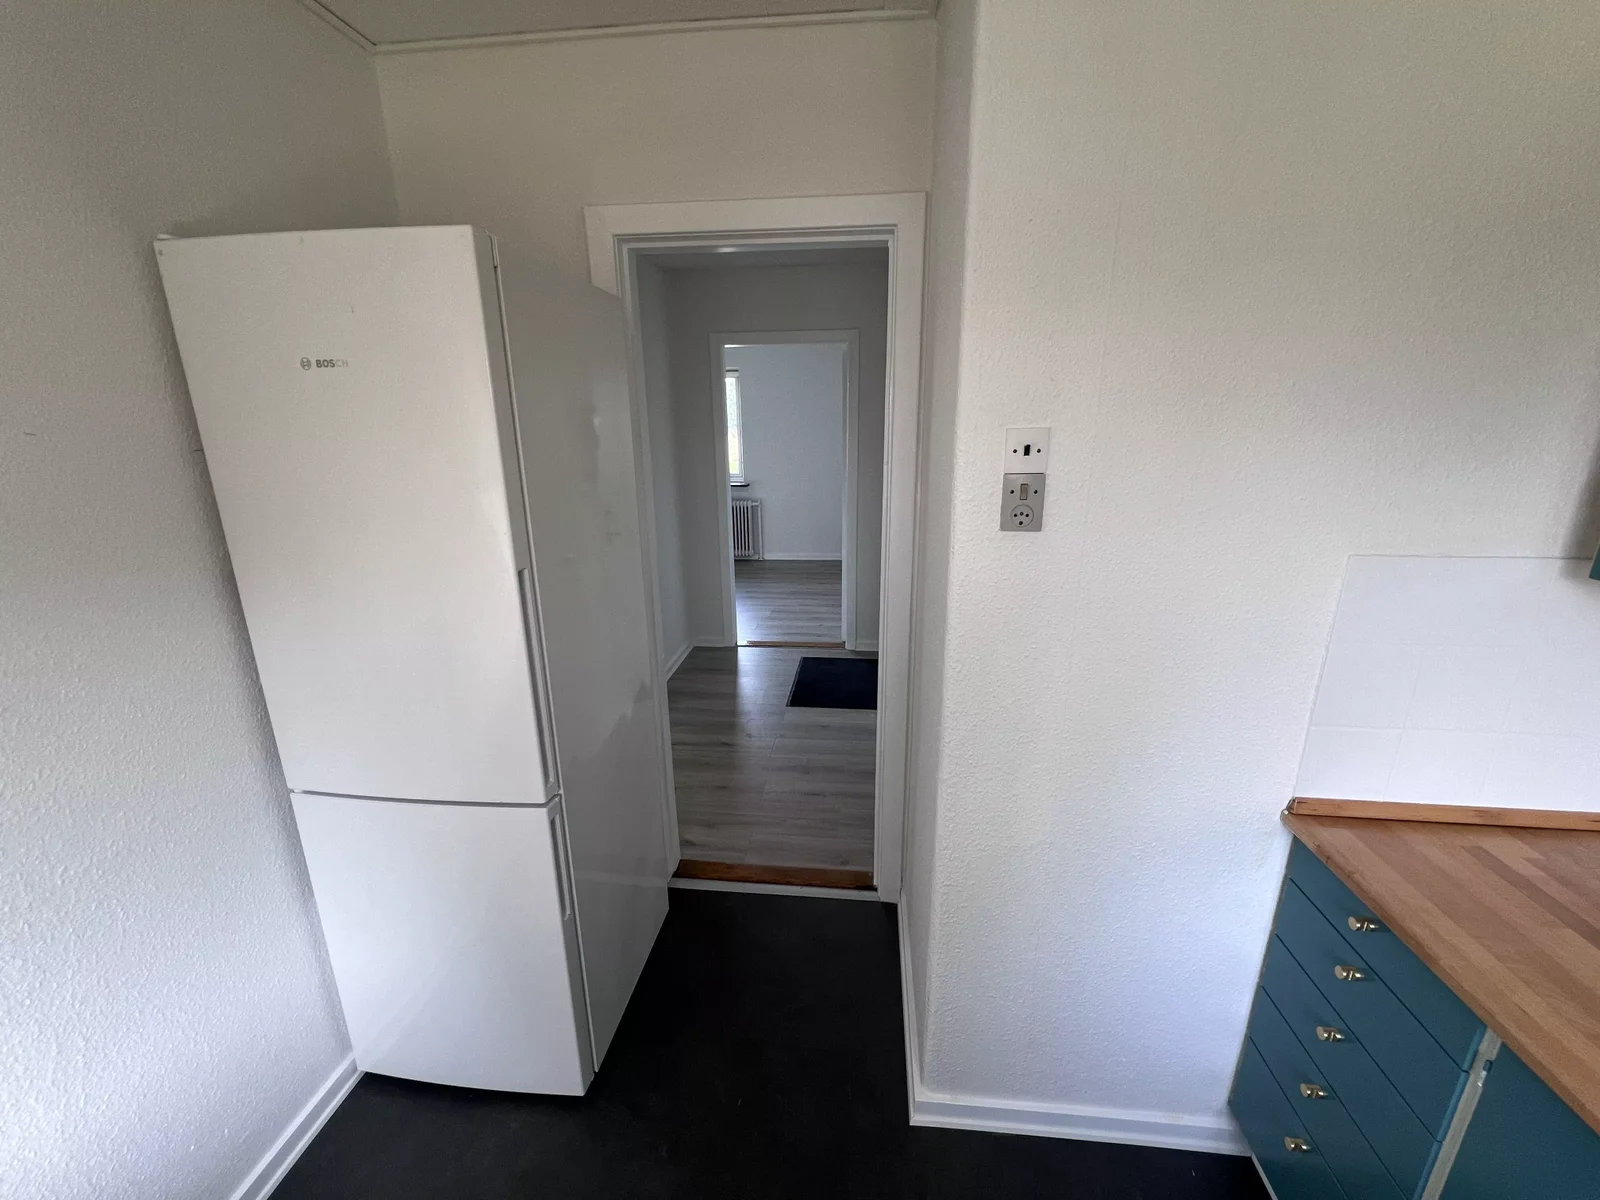 2 værelses lejlighed i Kjellerup 8620 på 70 kvm